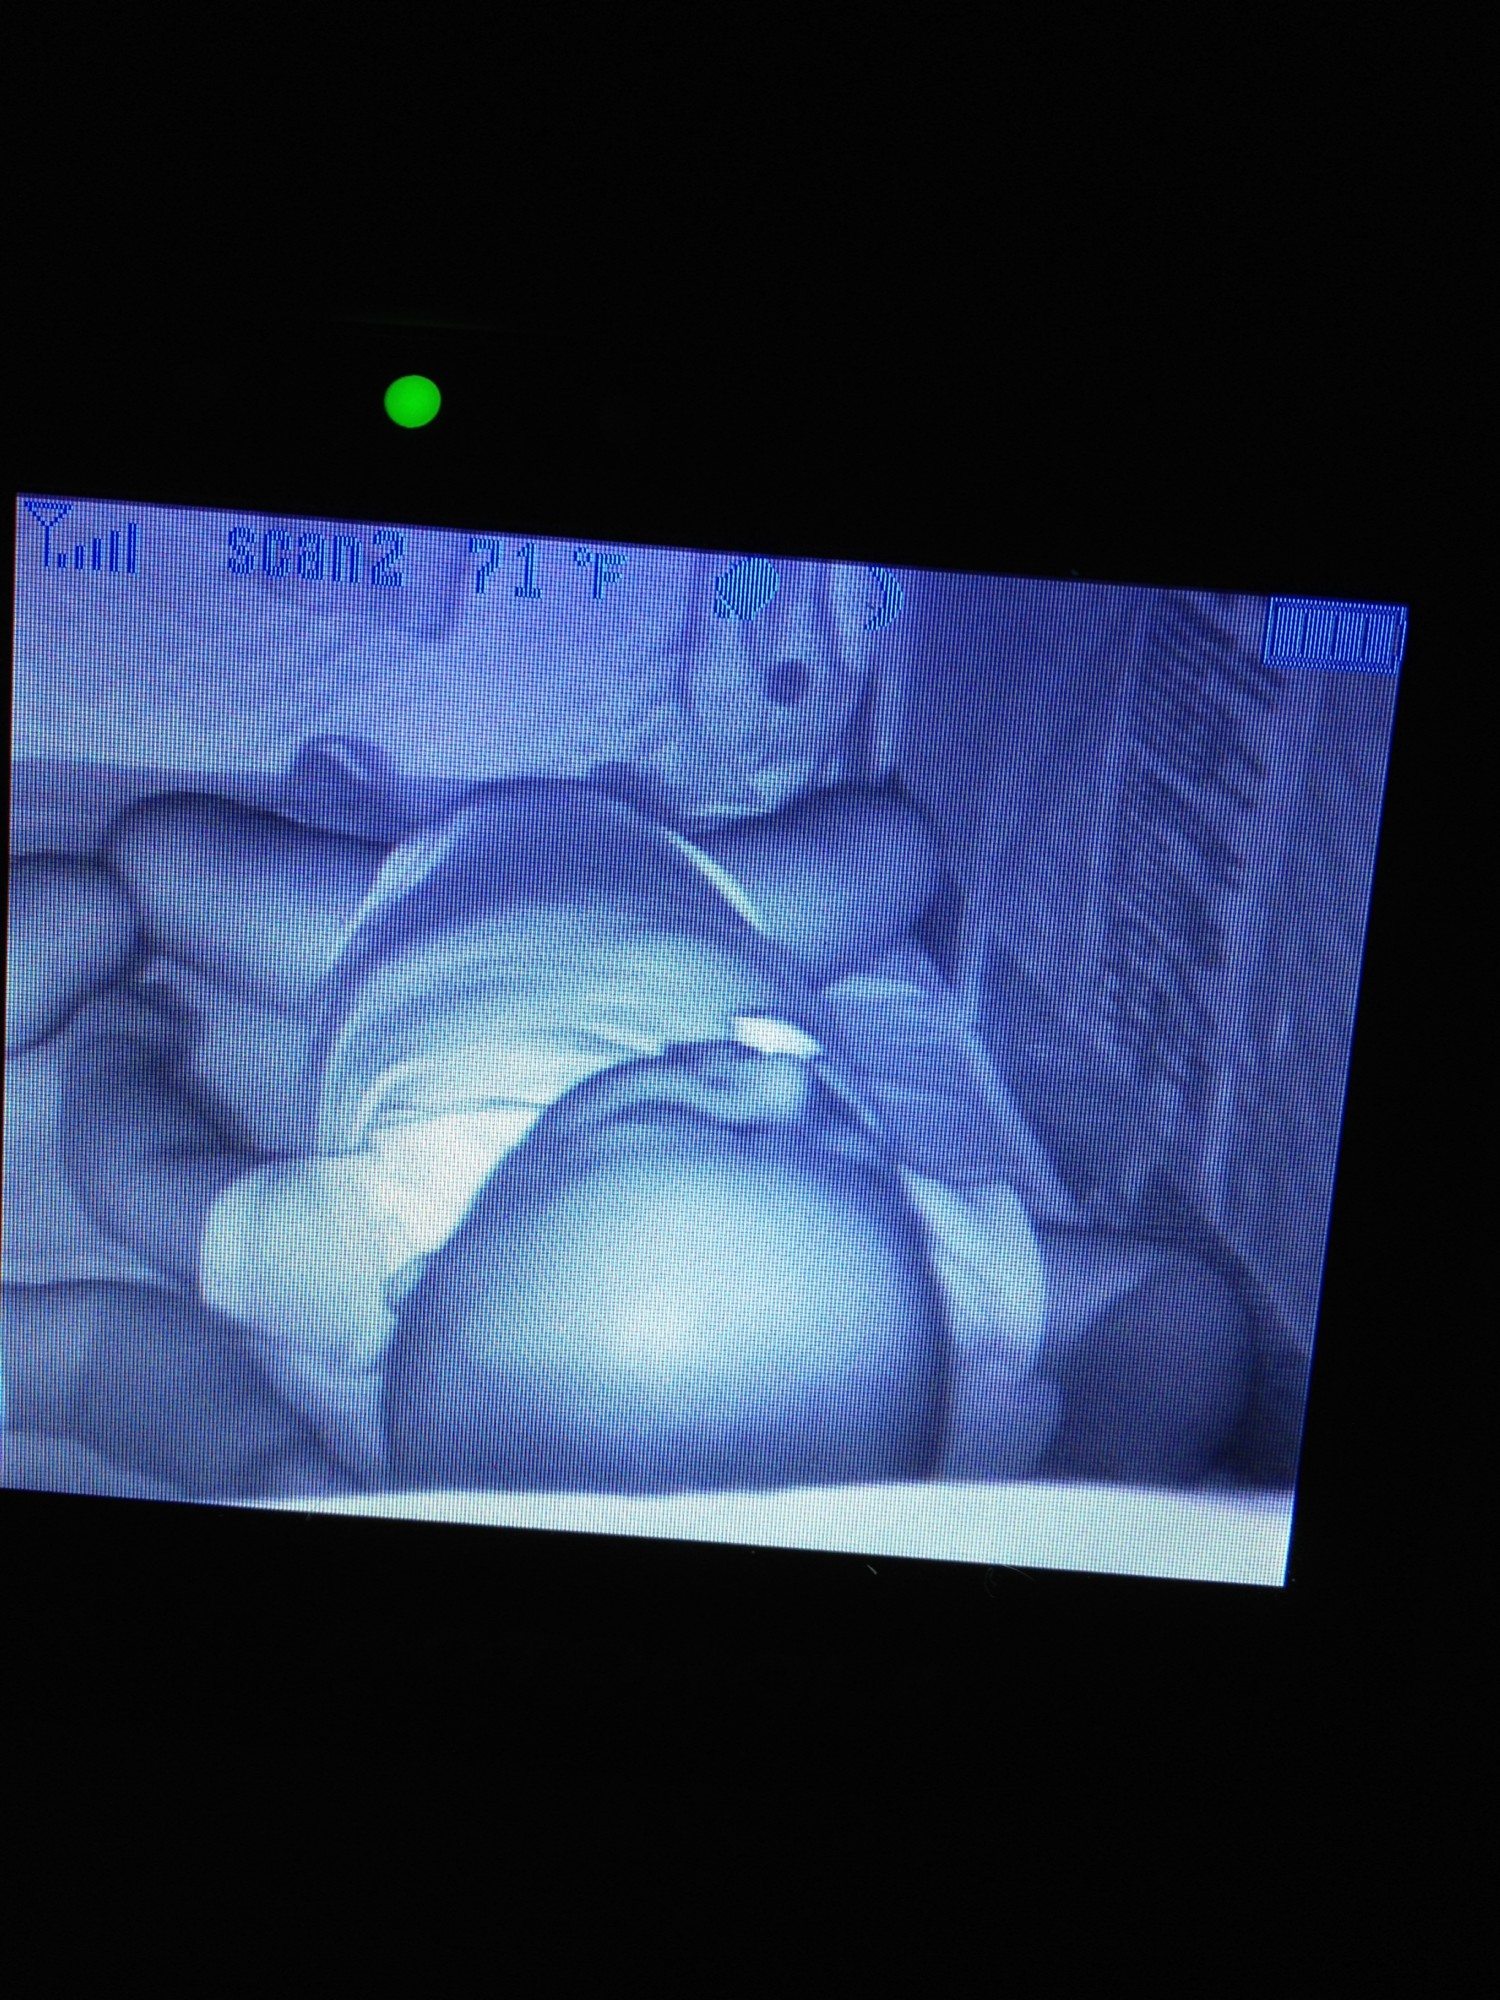 baby in crib monitor photo